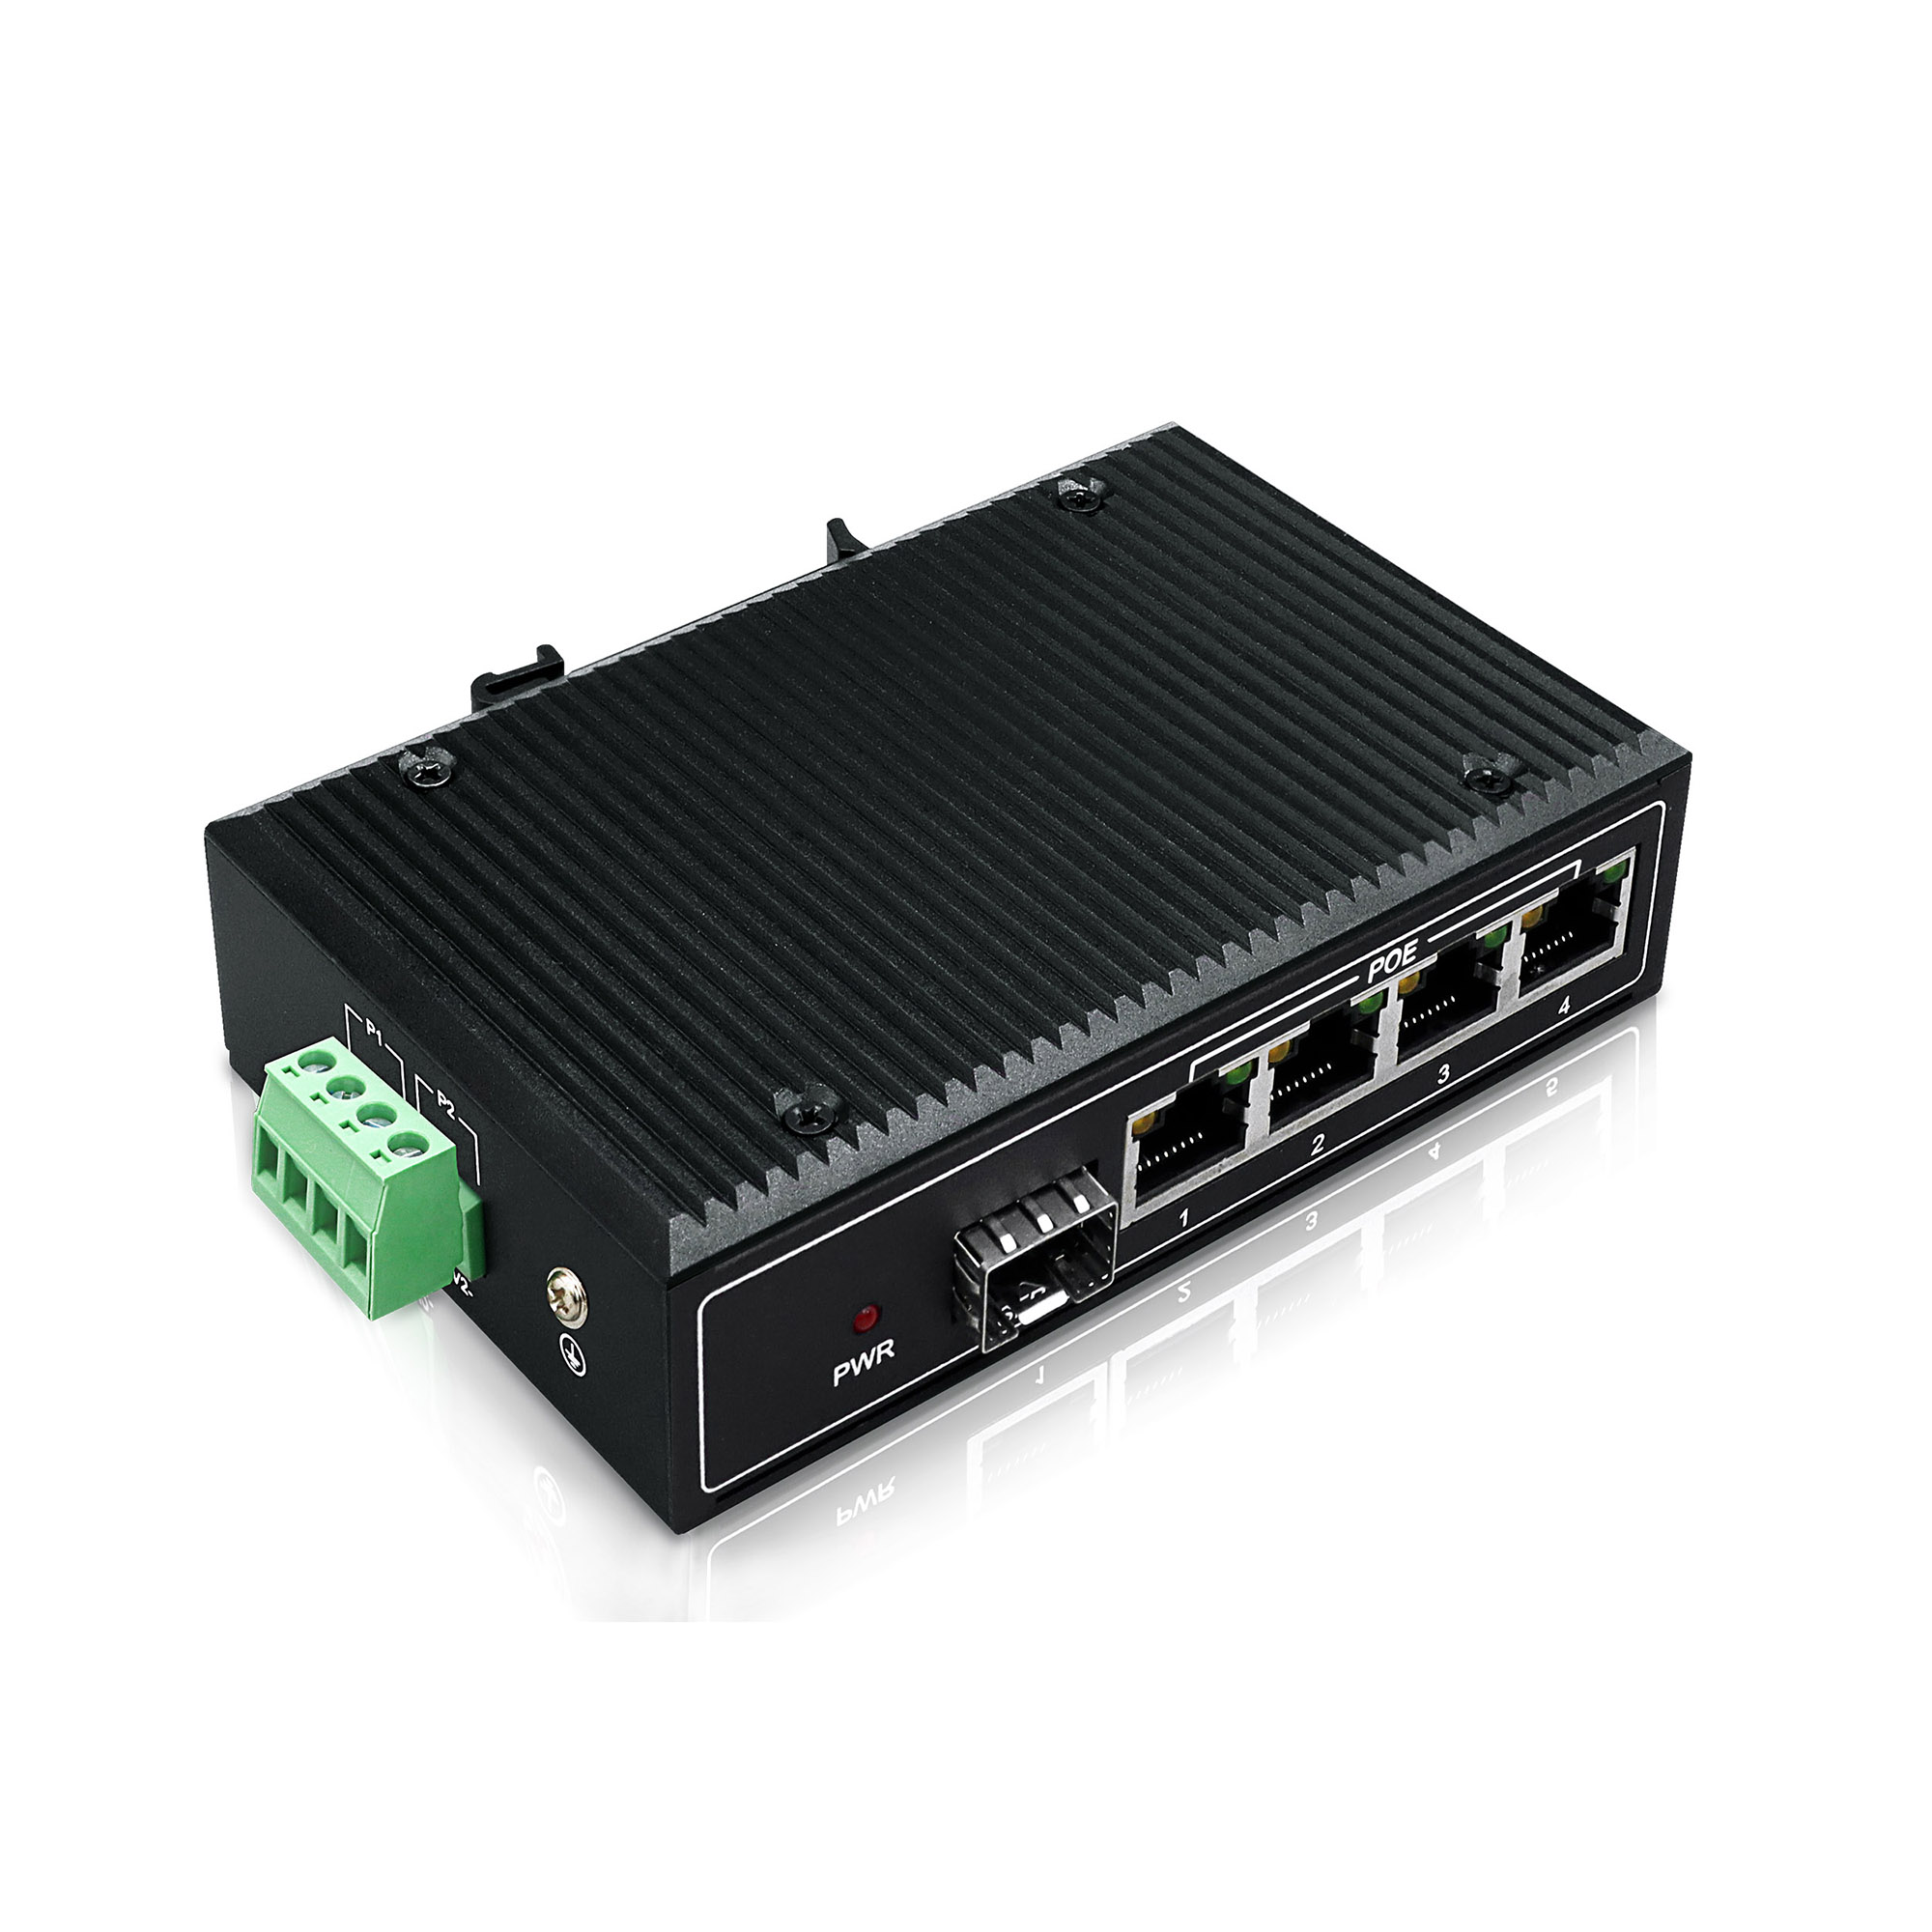 YN-SG105SP Industrial Ethernet PoE Switch